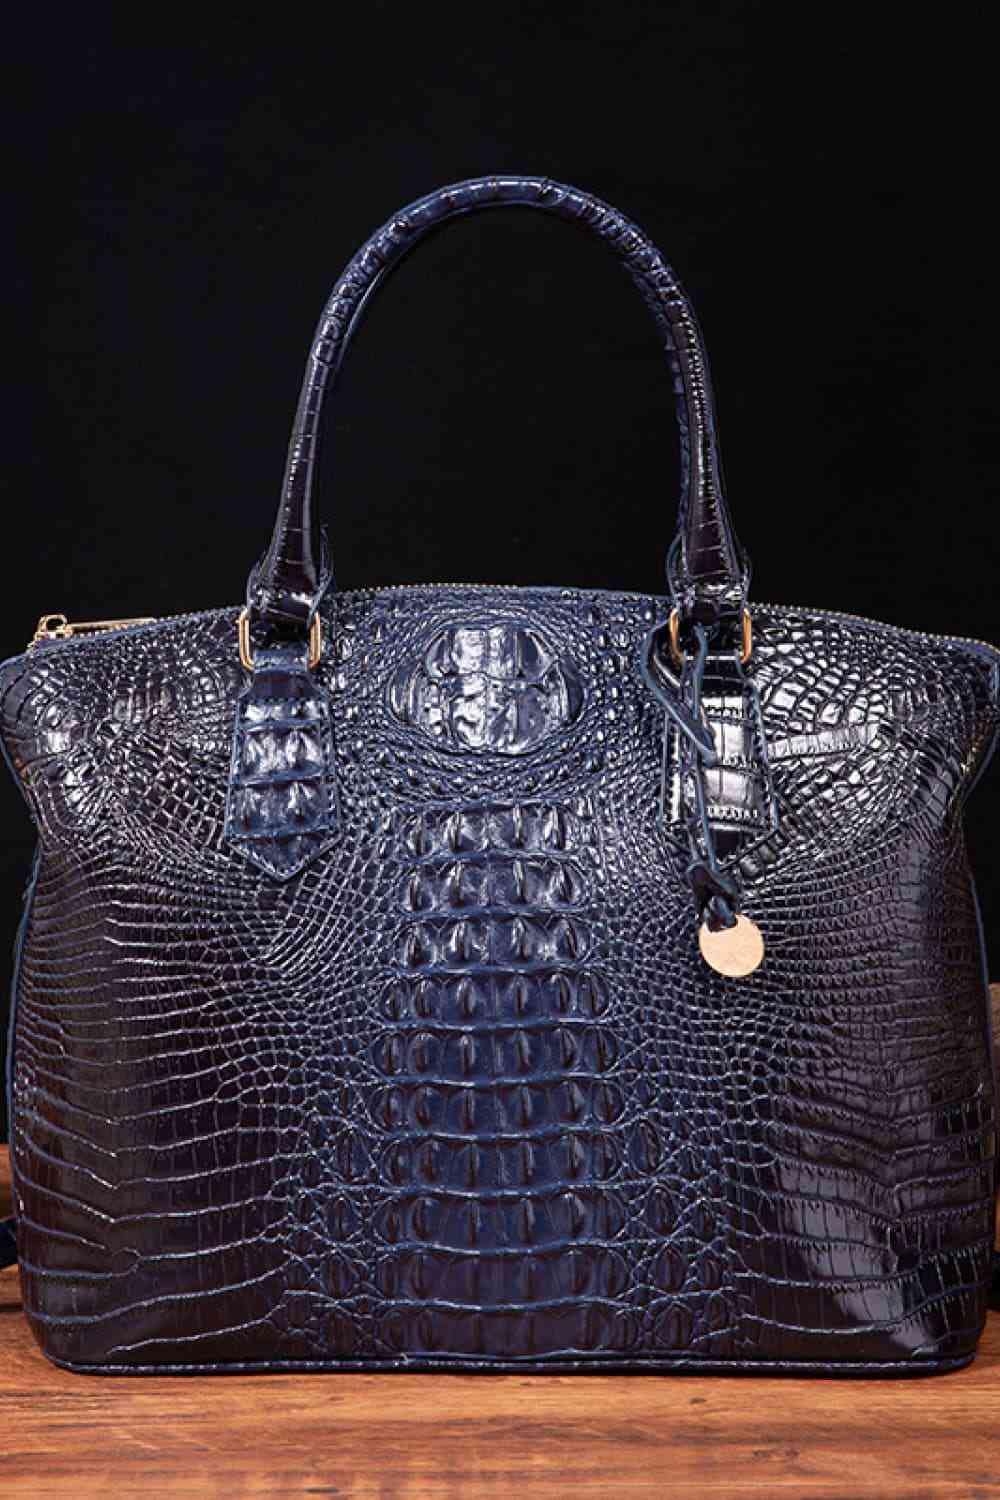 Vegan Leather Croc Embossed Handbag